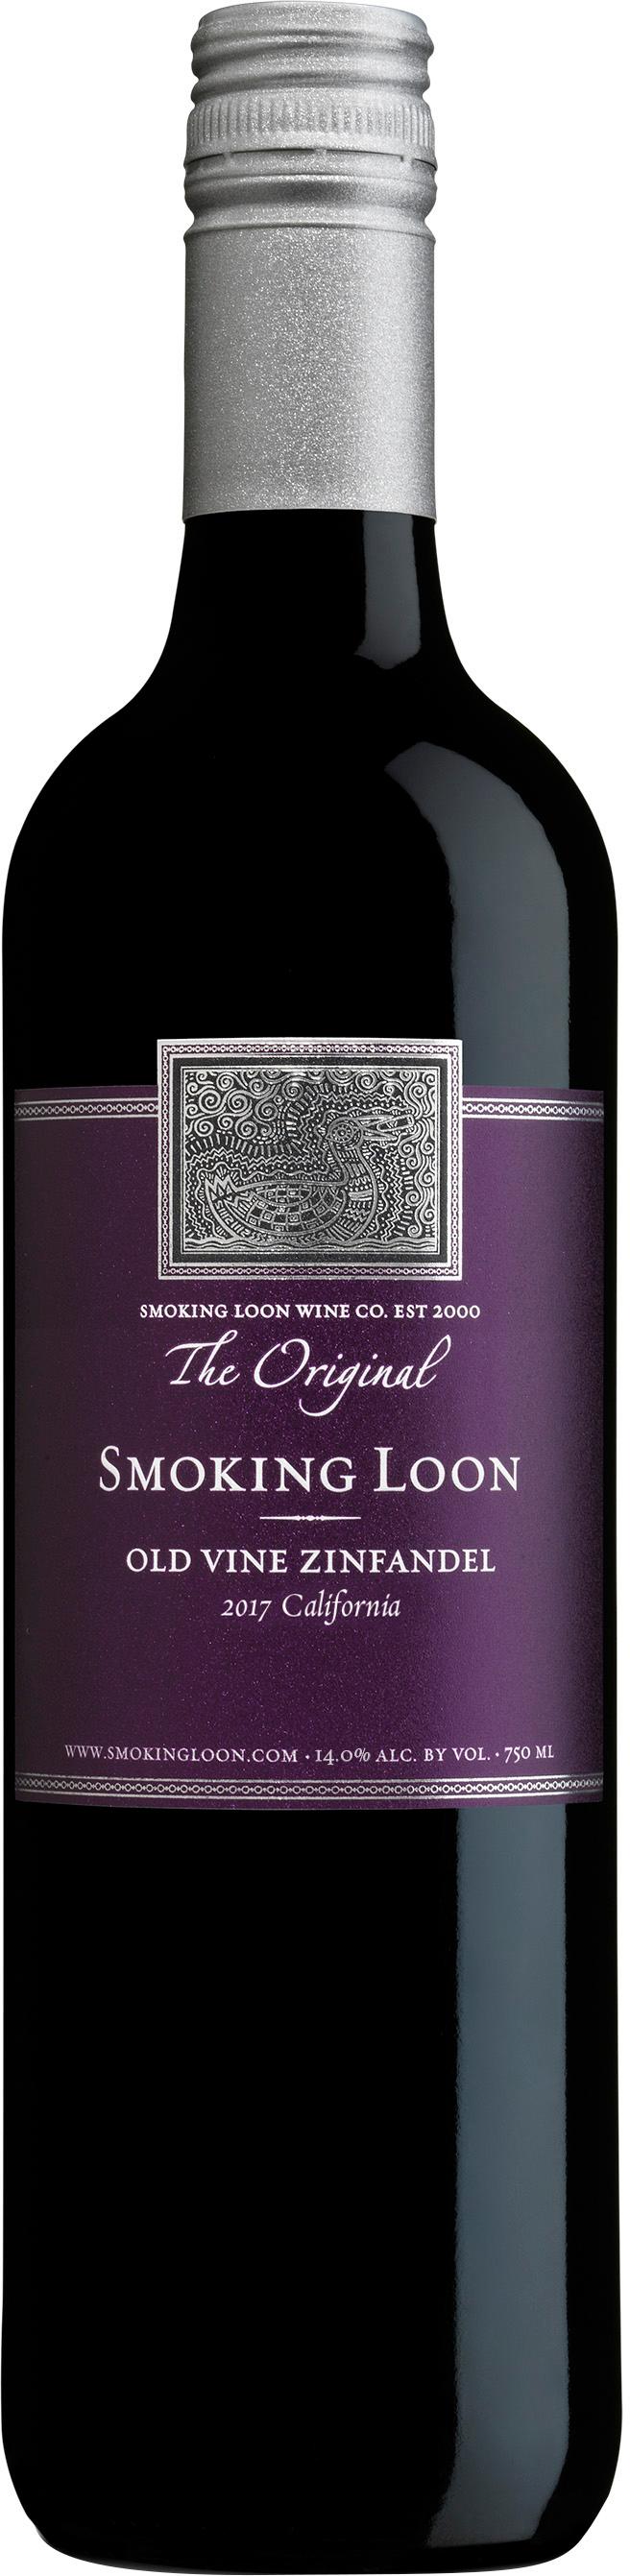 Smoking Loon Old Vine Zinfandel